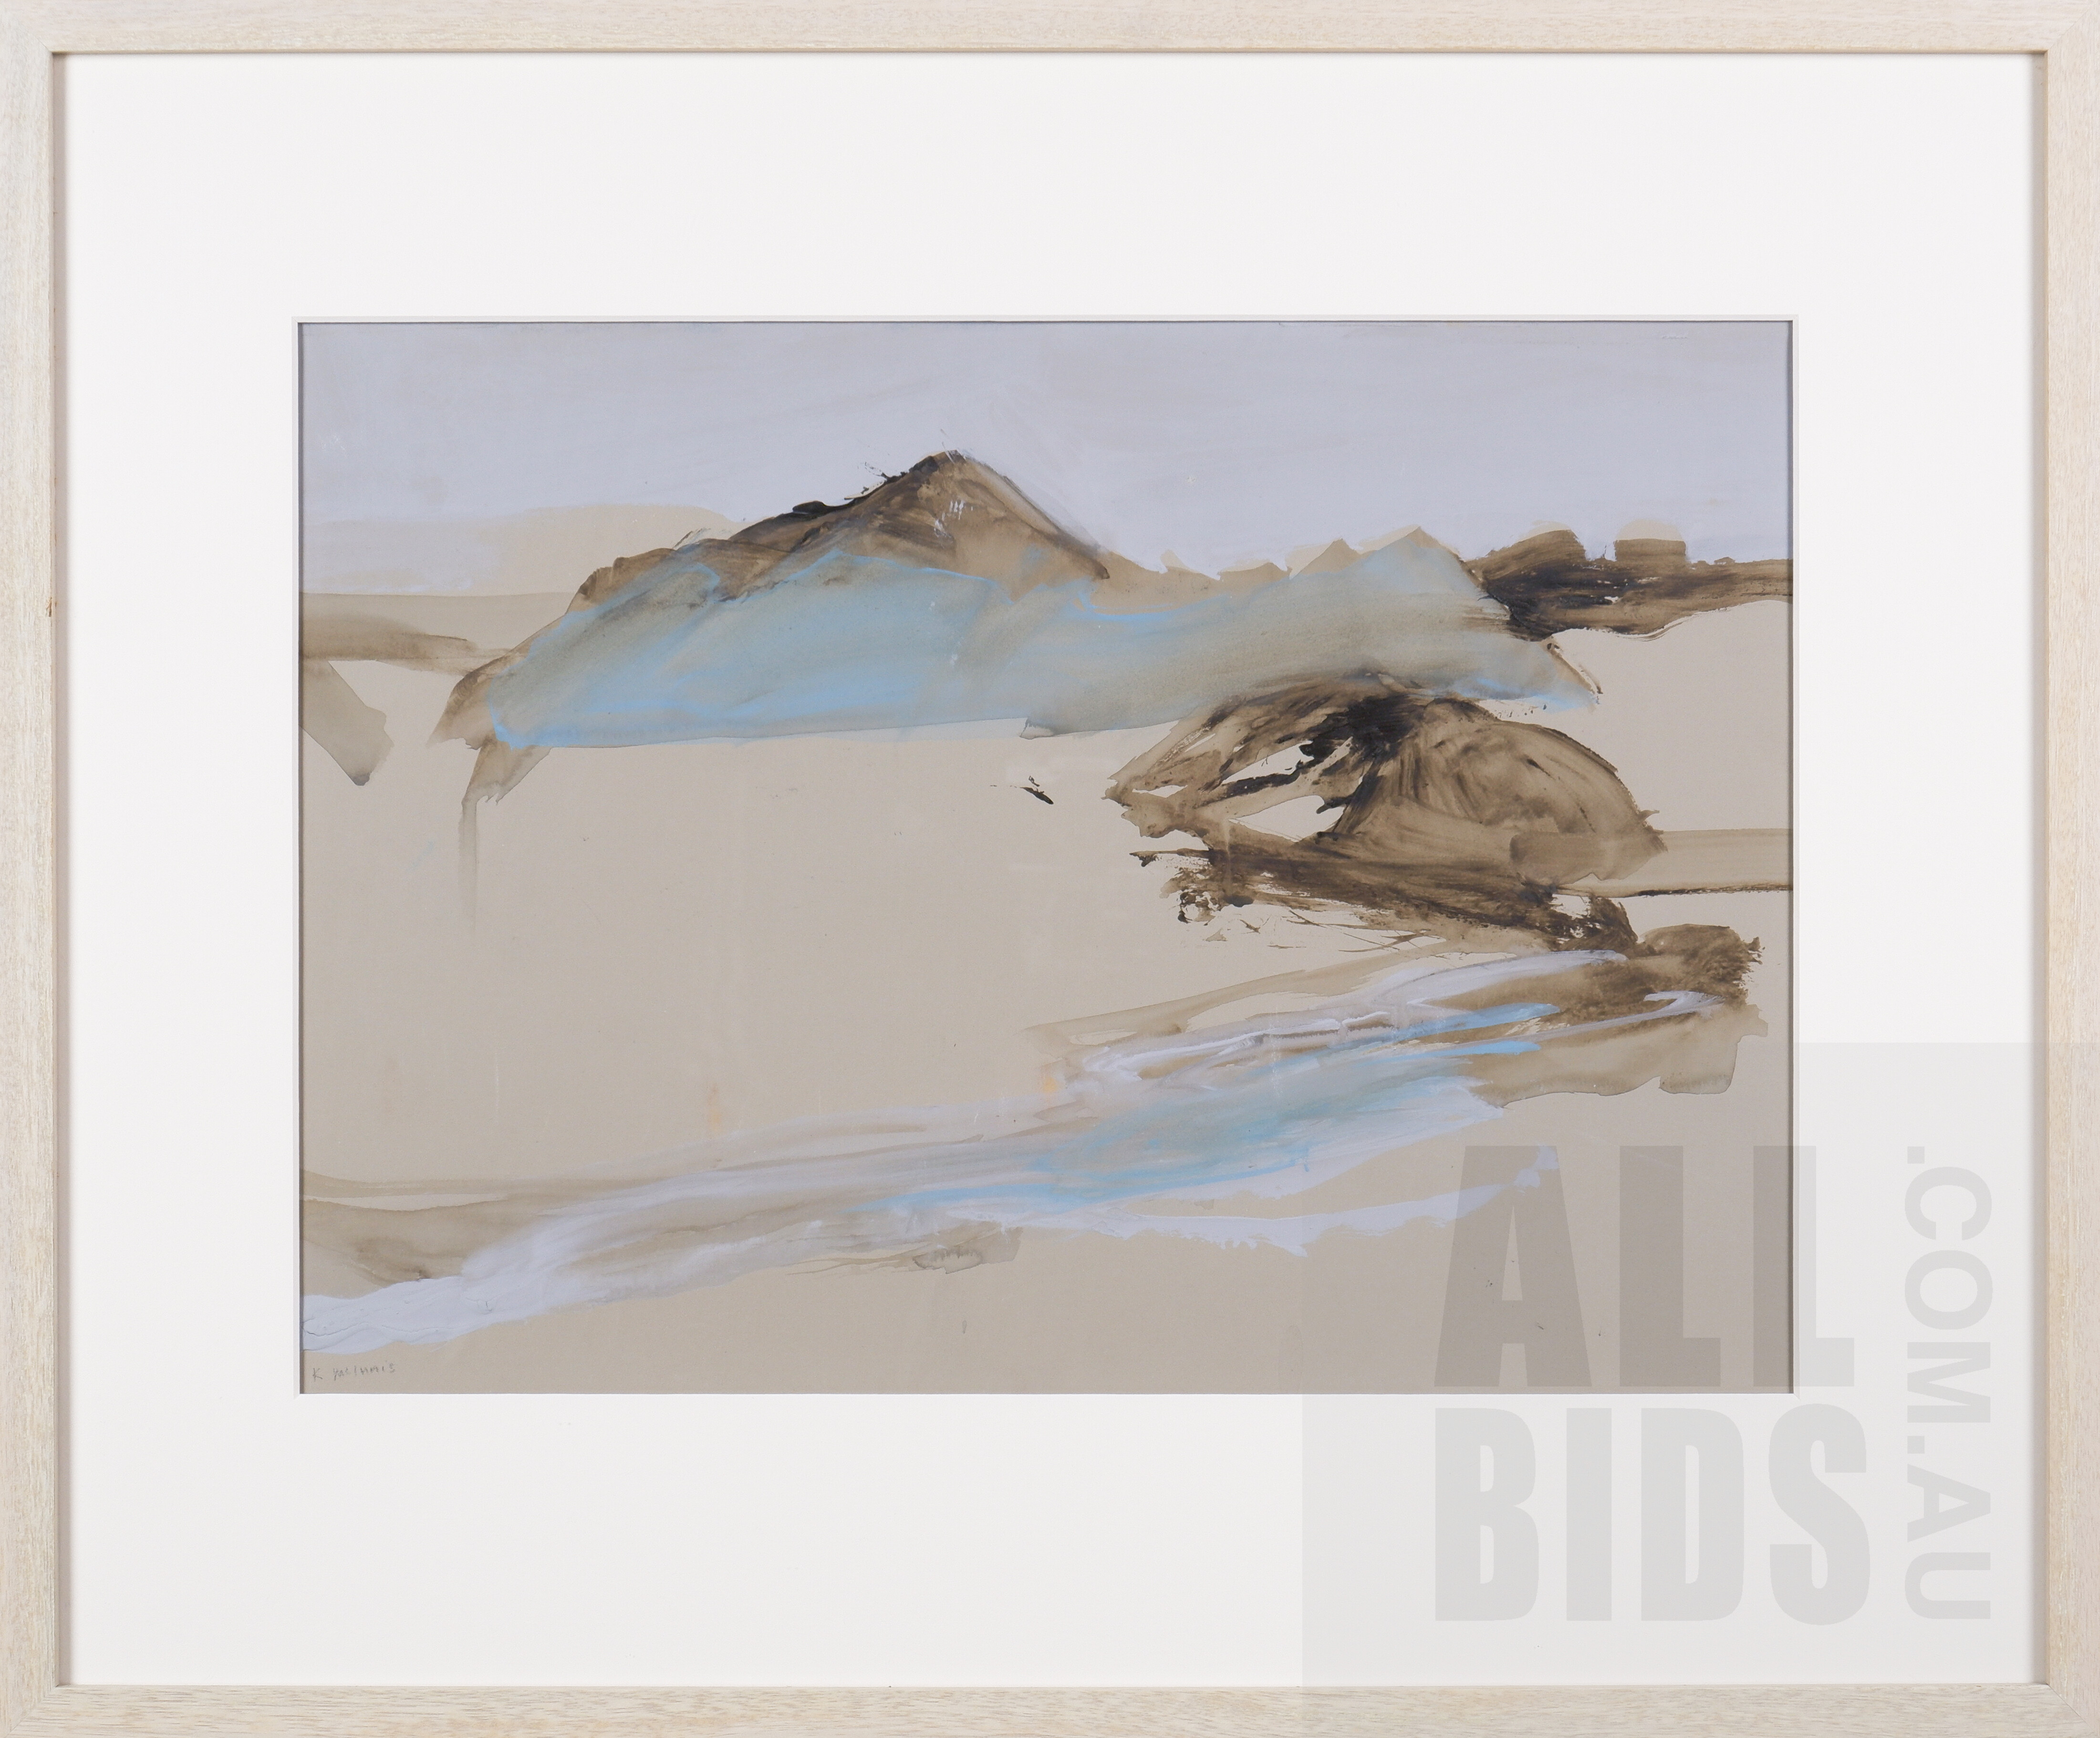 'Kerry McInniss (born 1952), Field Sketch I, Bungendore Sand Mines 2010, Acrylic on Paper, 33 x 46 cm'